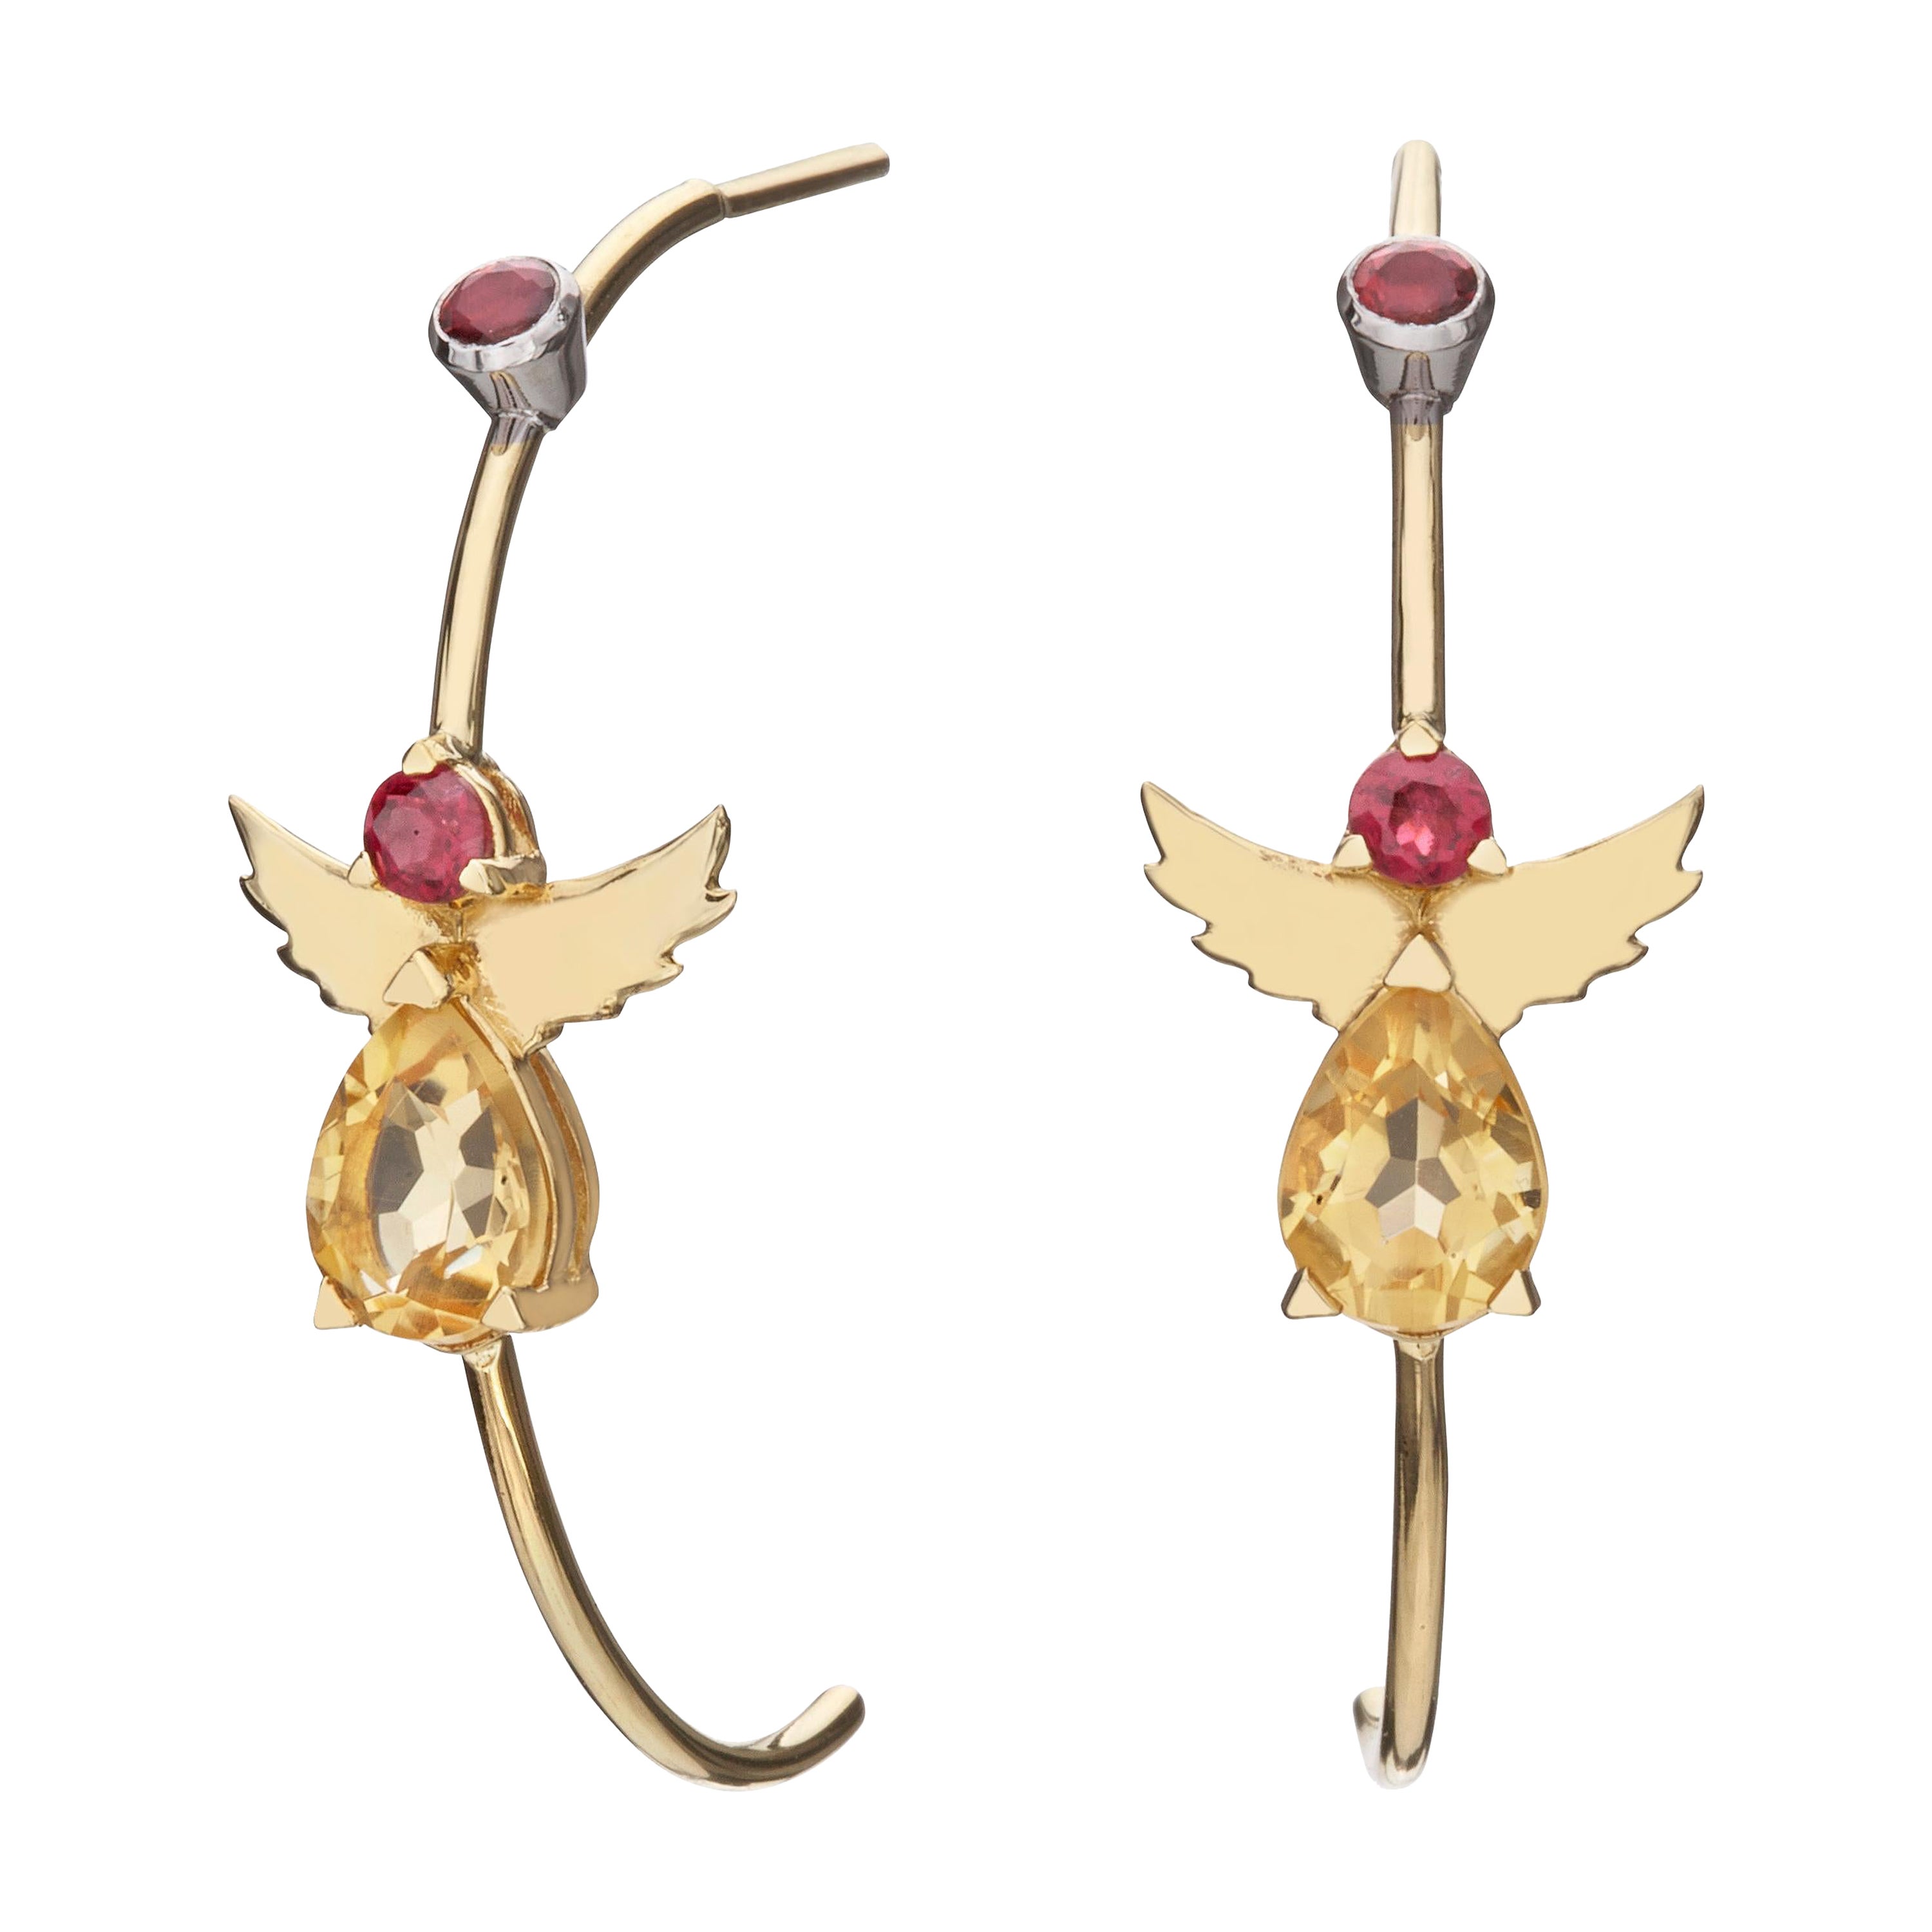 Nicofilimon the Jewelry Designer   Hoop Earrings